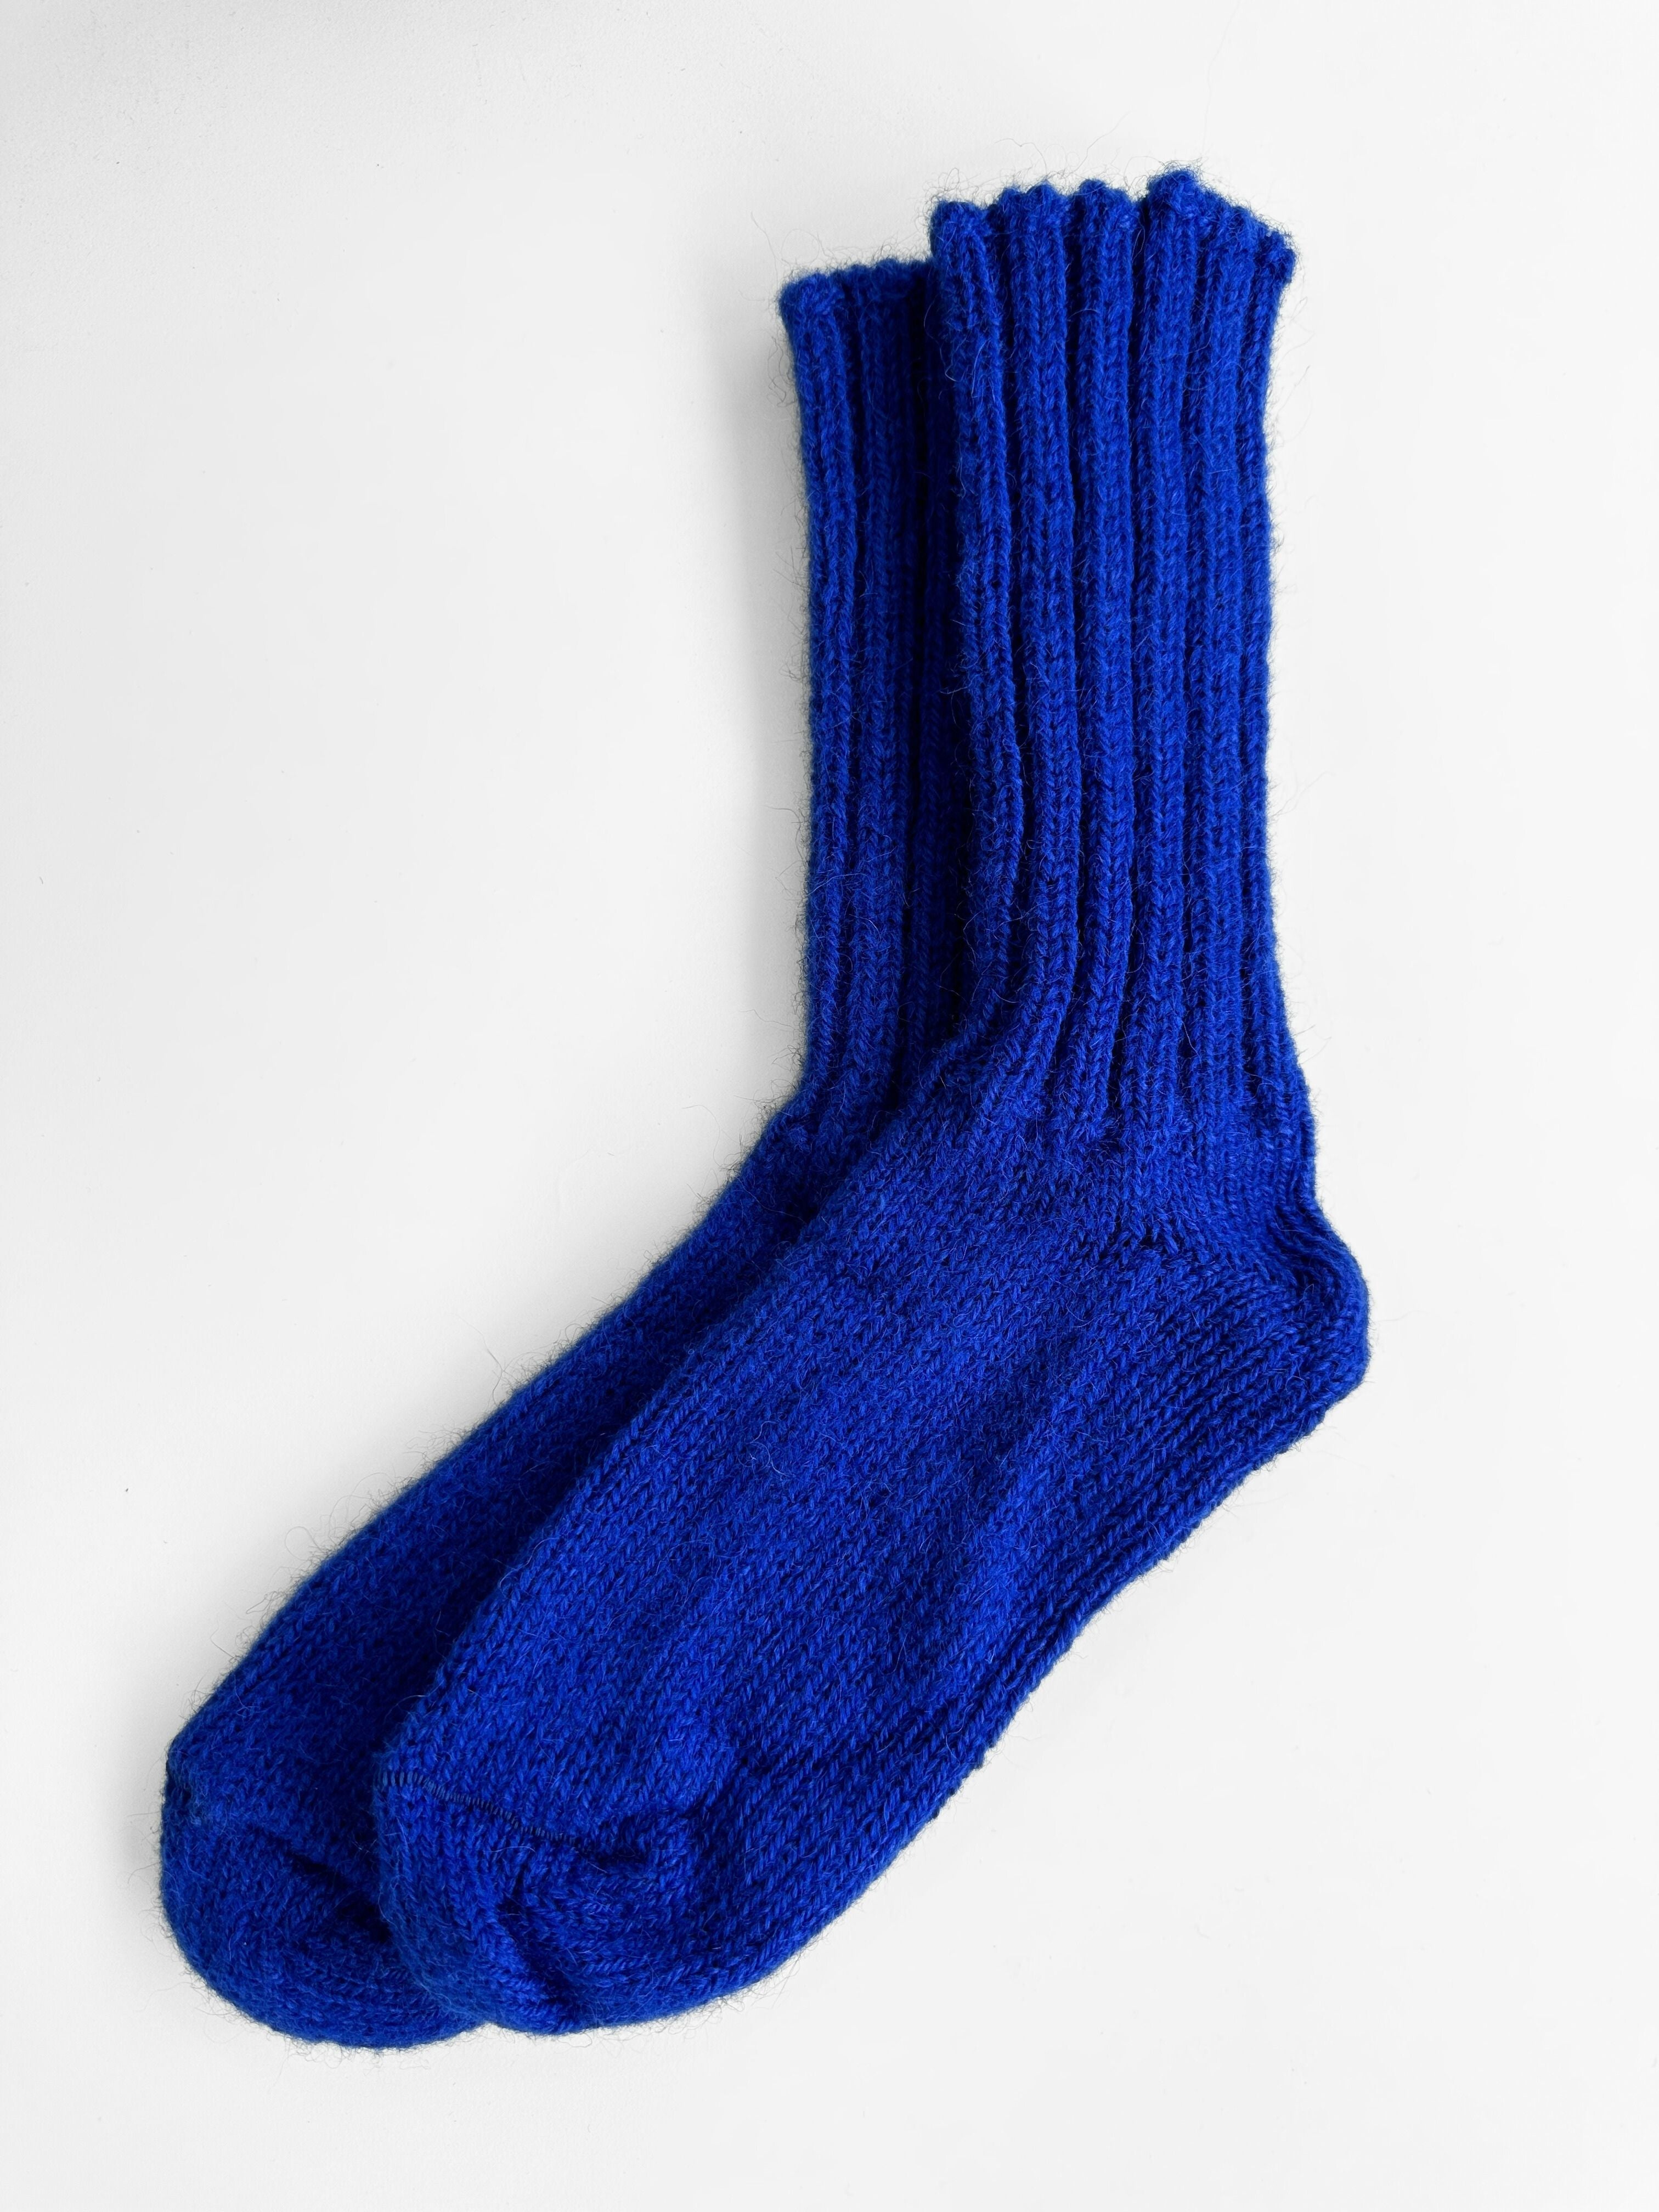 Icelandic Wool Socks - Indigo Blue